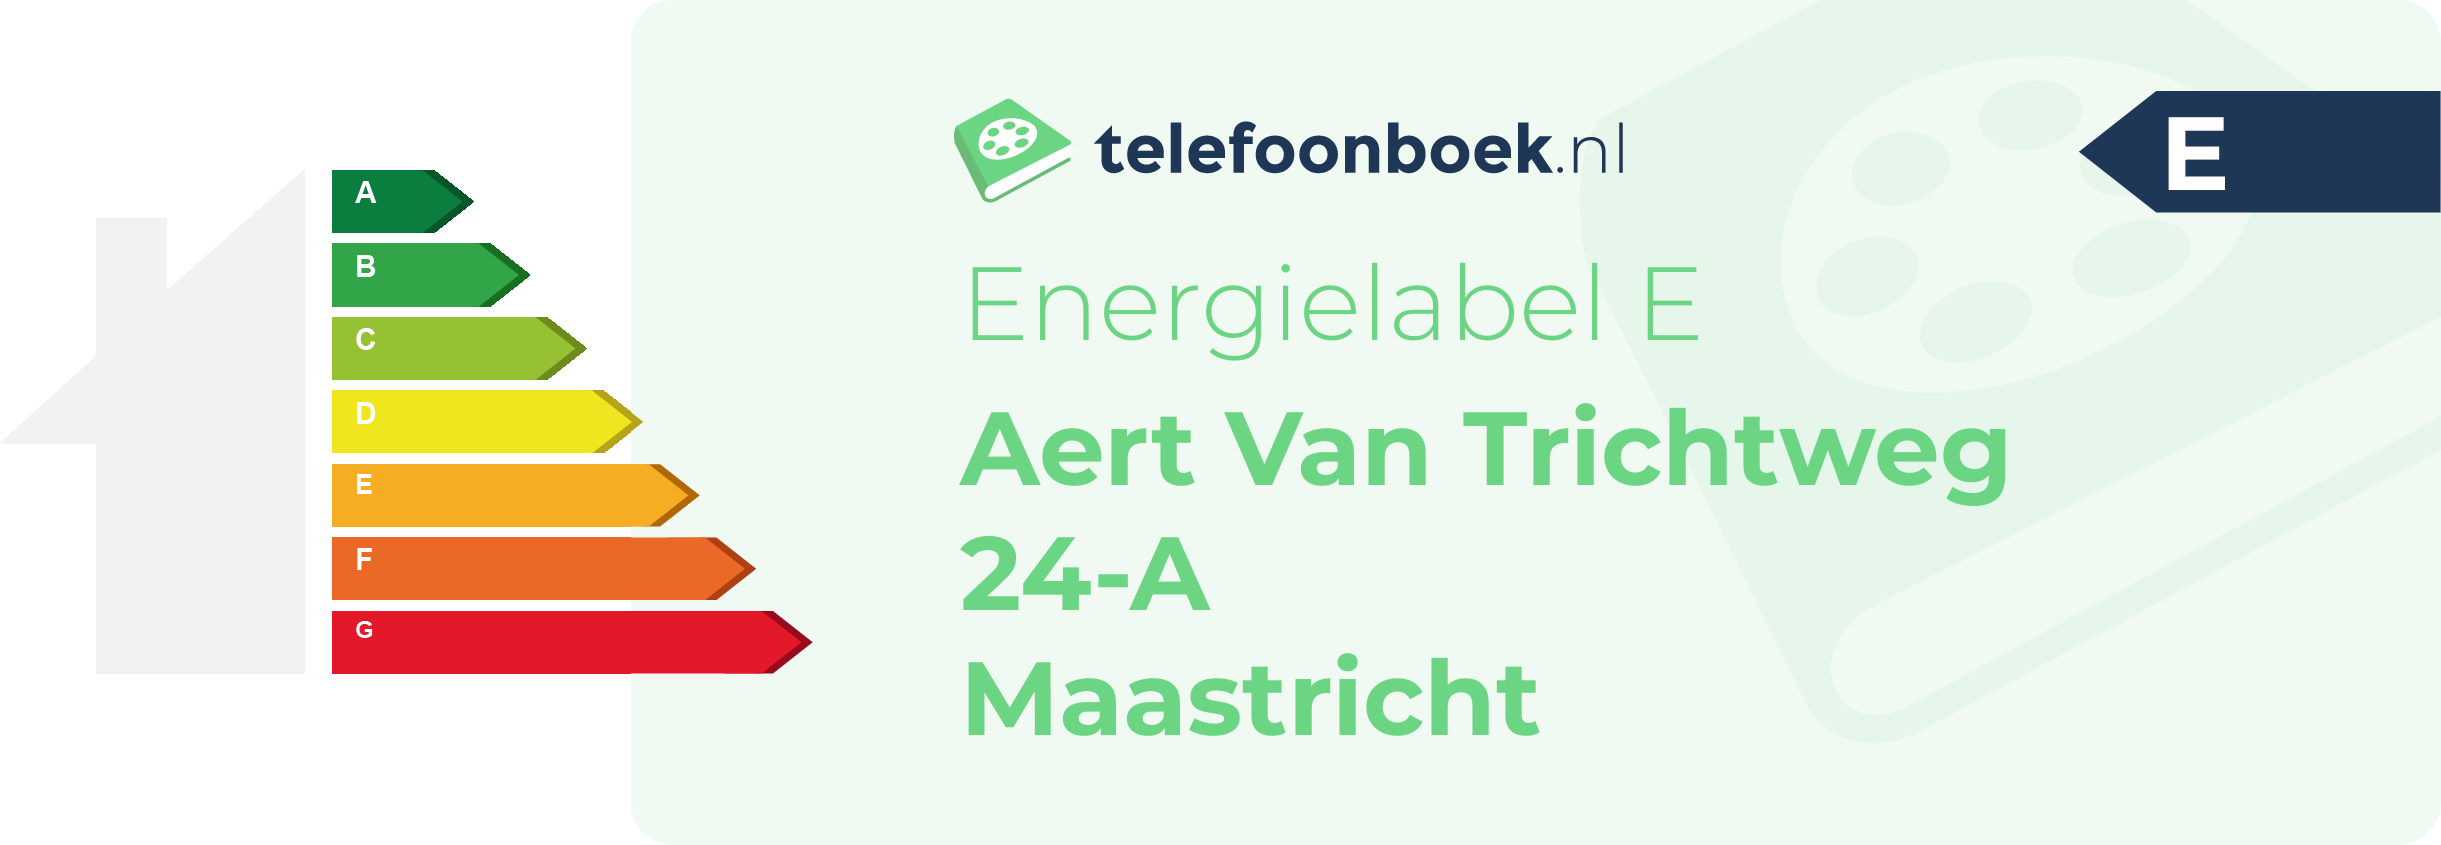 Energielabel Aert Van Trichtweg 24-A Maastricht